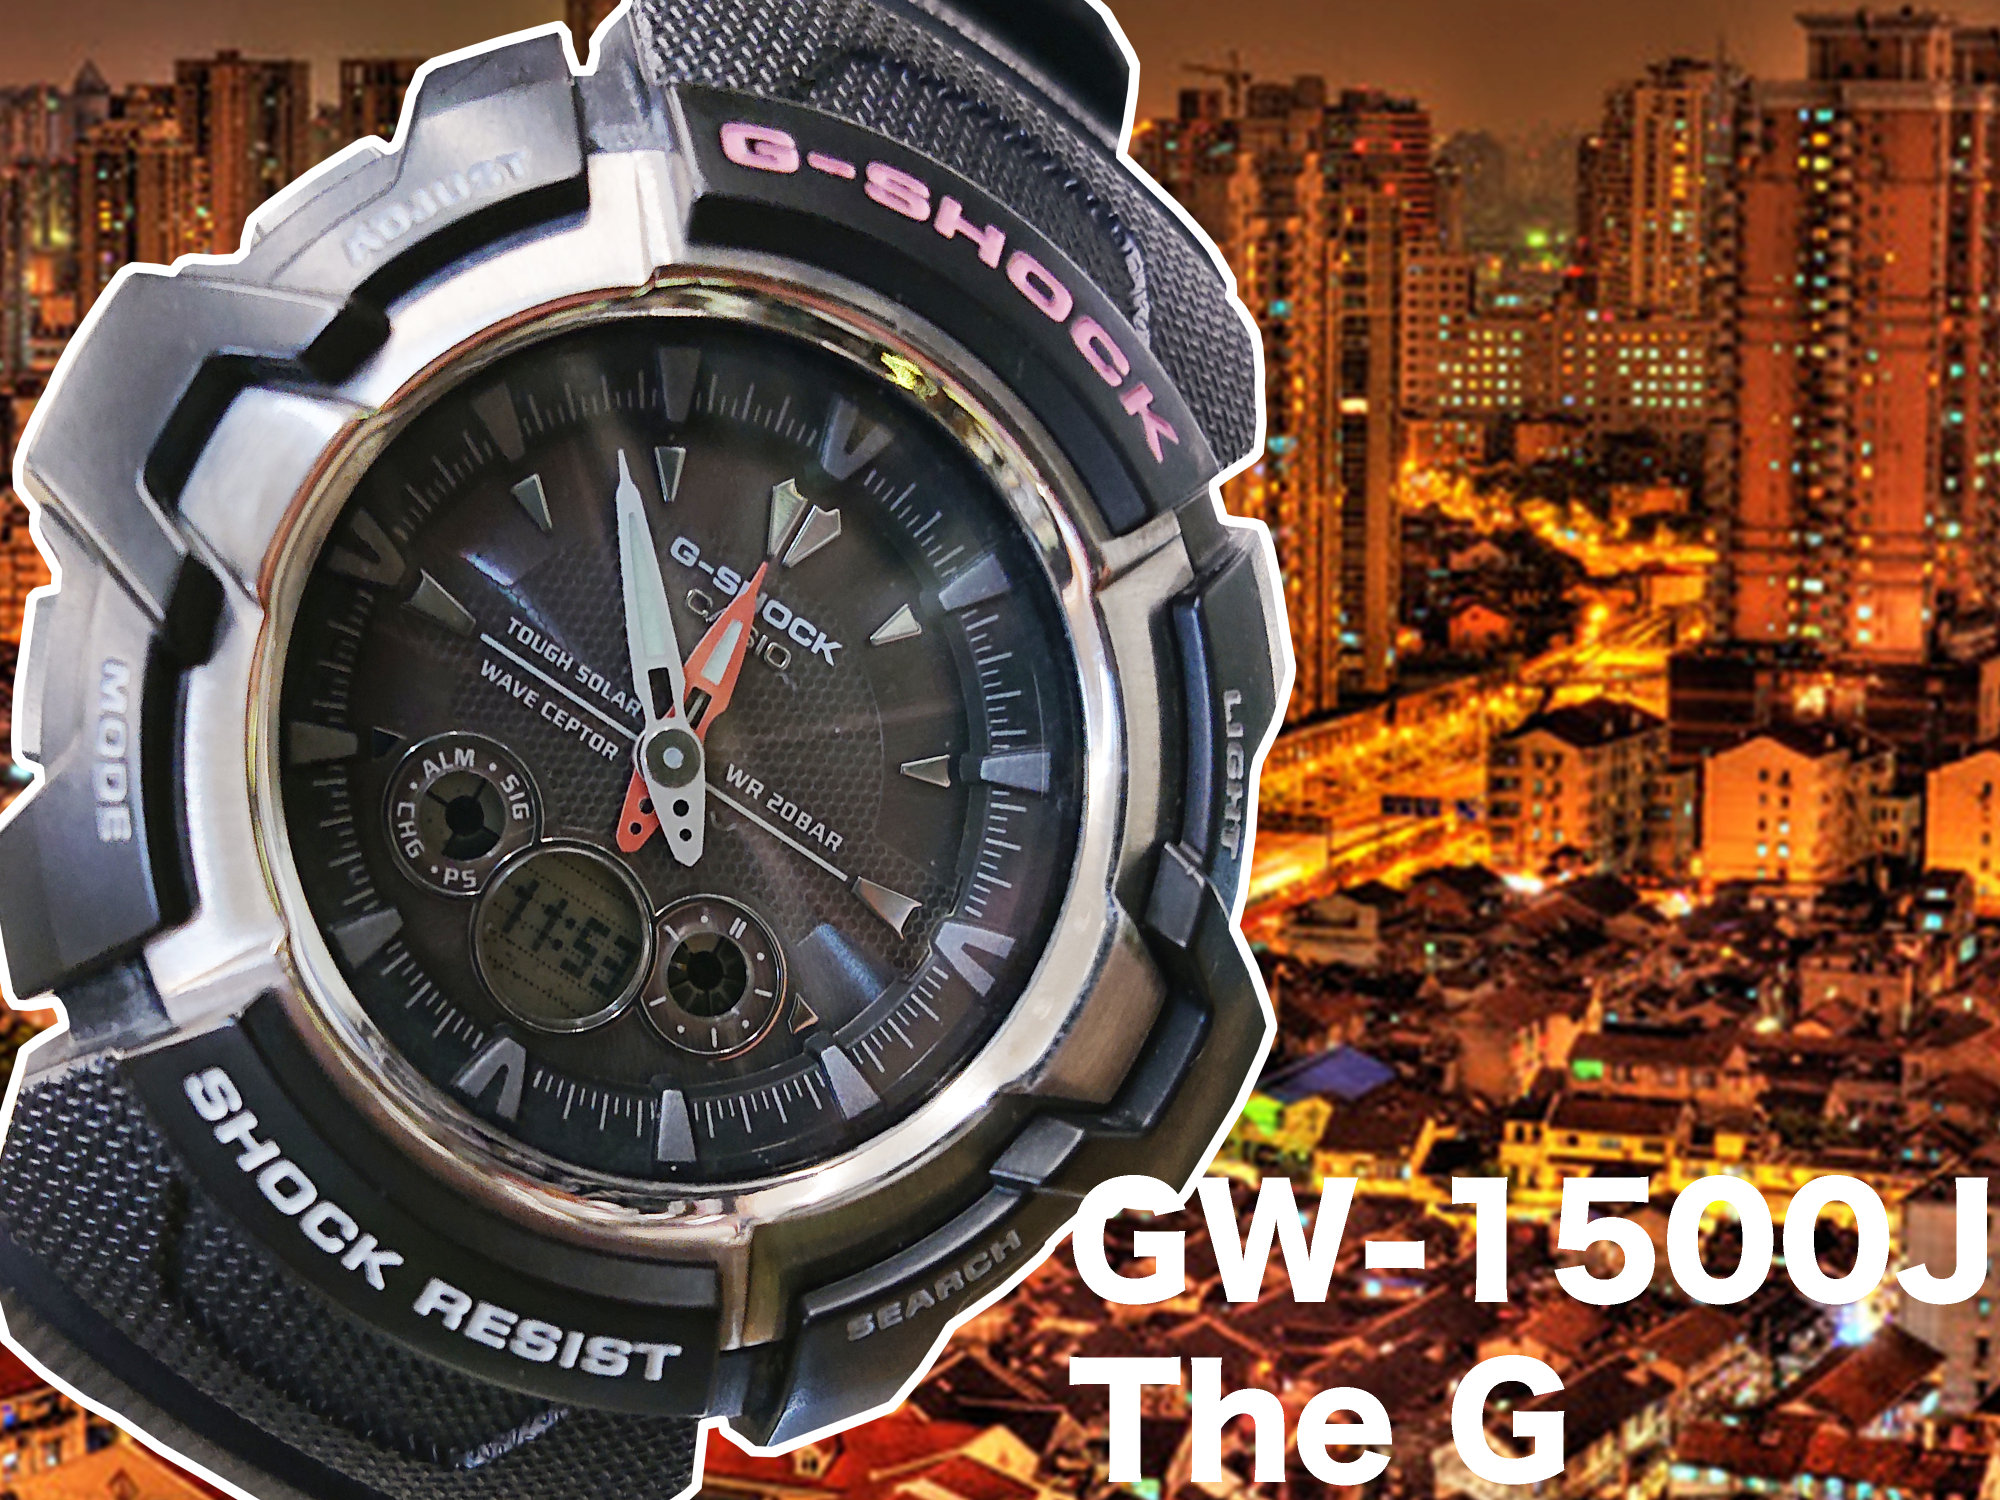 G-SHOCK買取実績】GW-1500J The G 買取価格1,500円 | G-SHOCK買い取り ...